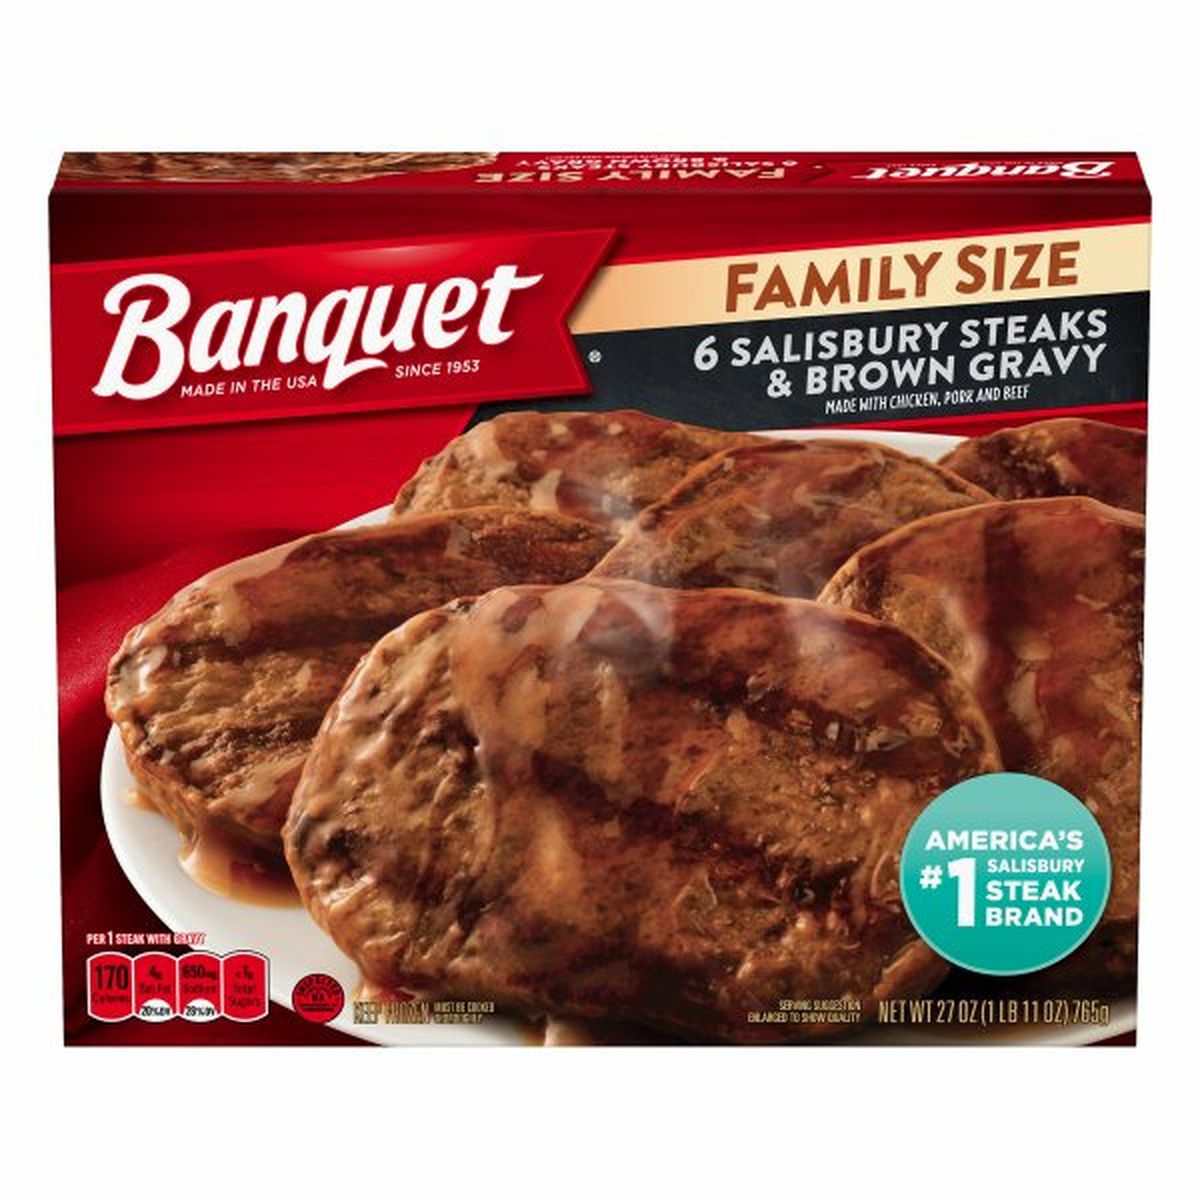 Calories in Banquet Salisbury Steaks & Brown Gravy, Family Size